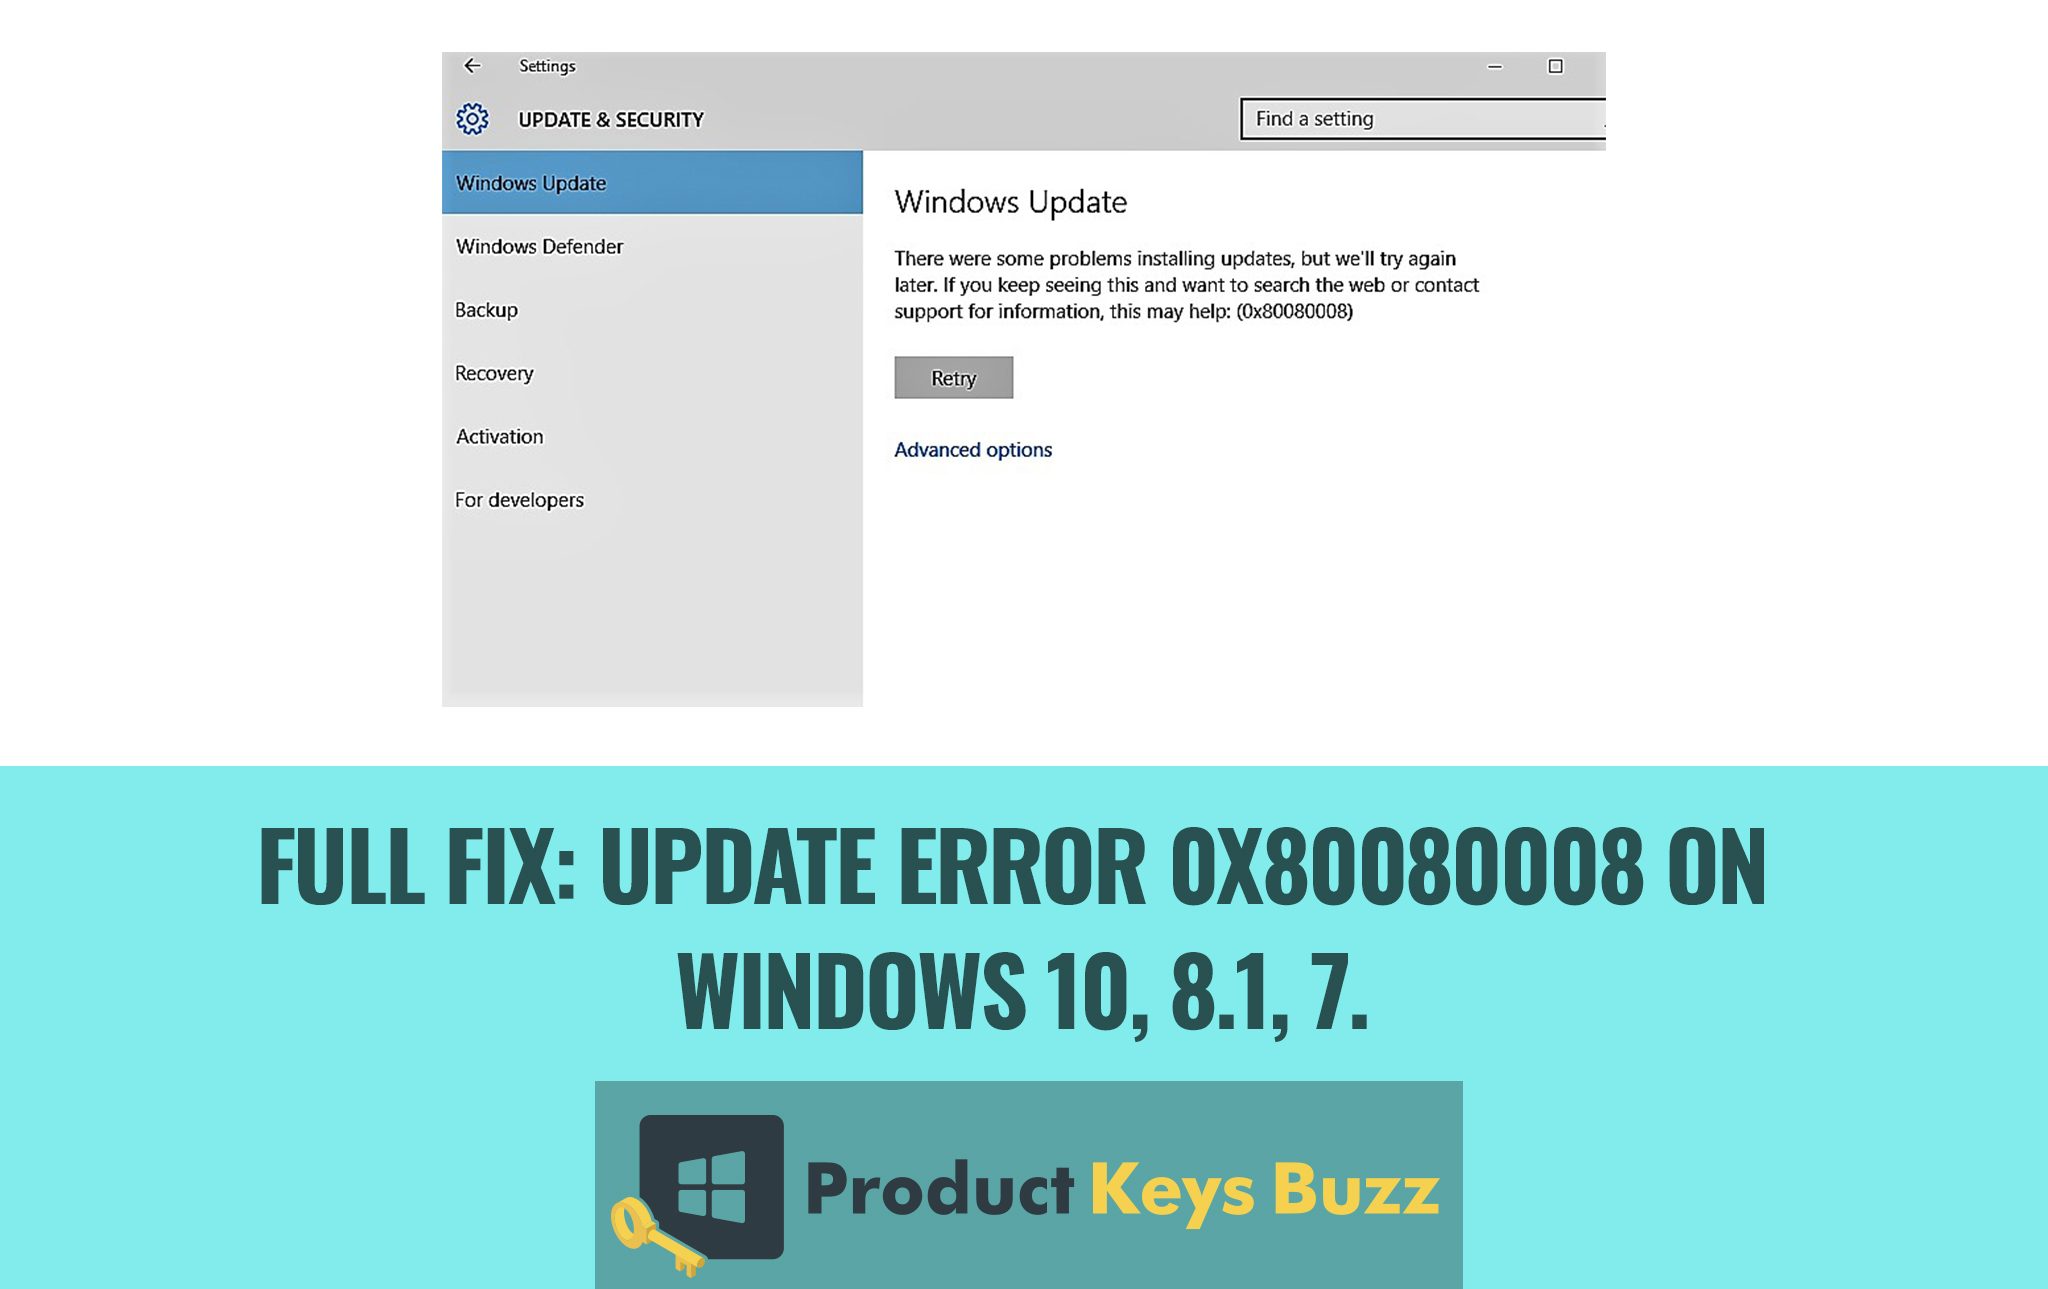 Full fix Update error 0x80080008 on Windows 10, 8.1, 7.